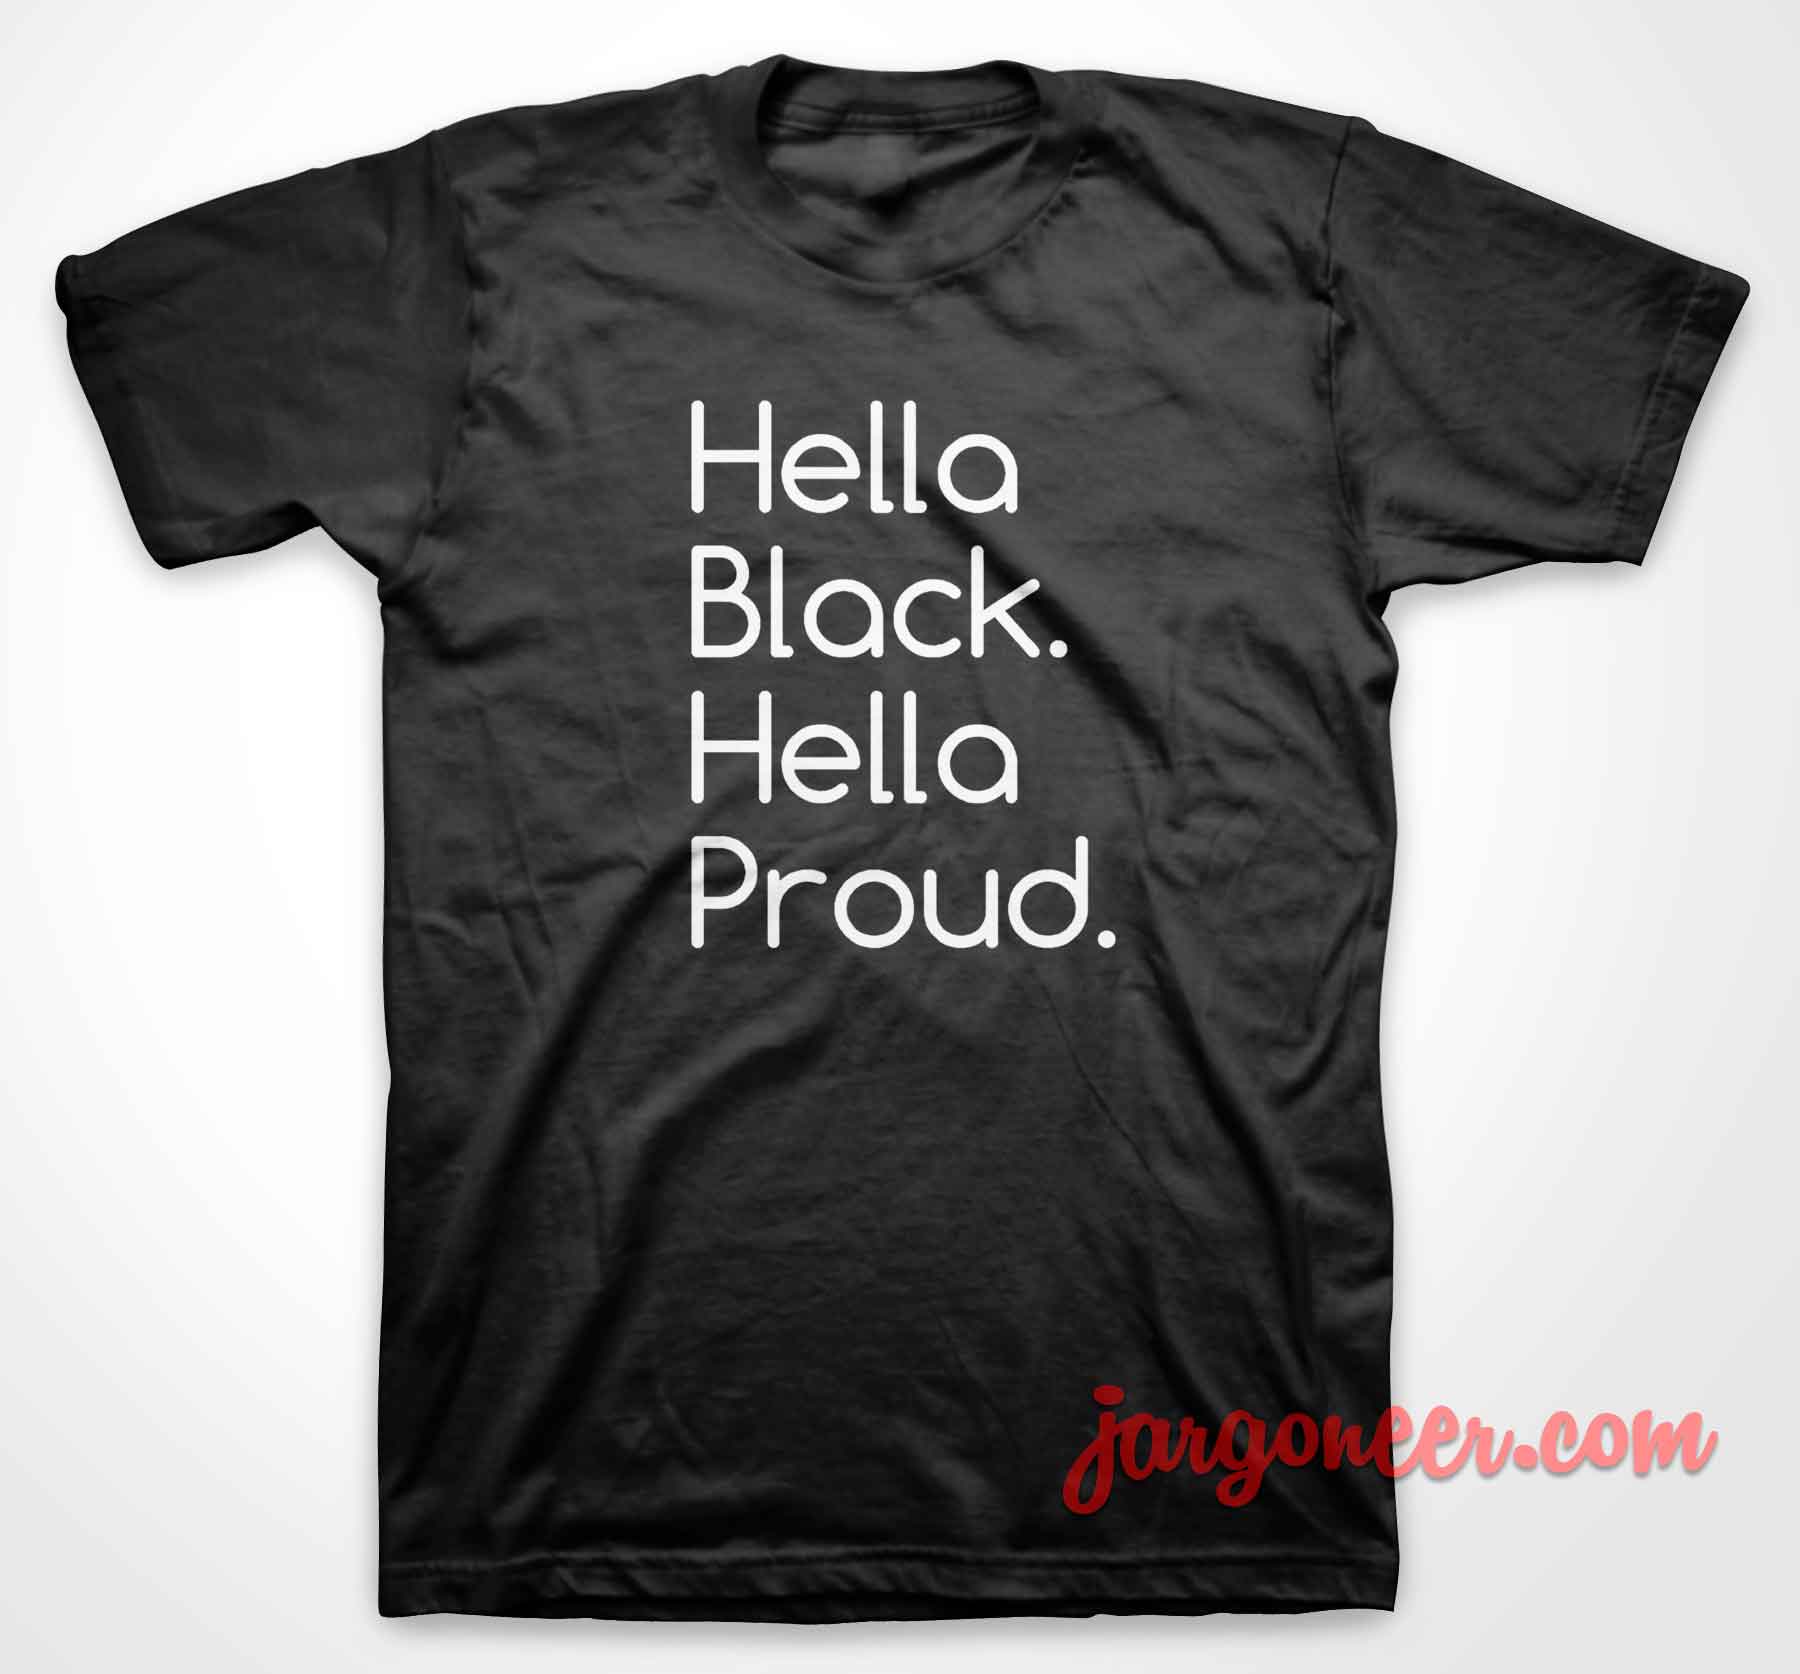 Hella Black Hella Proud - Shop Unique Graphic Cool Shirt Designs